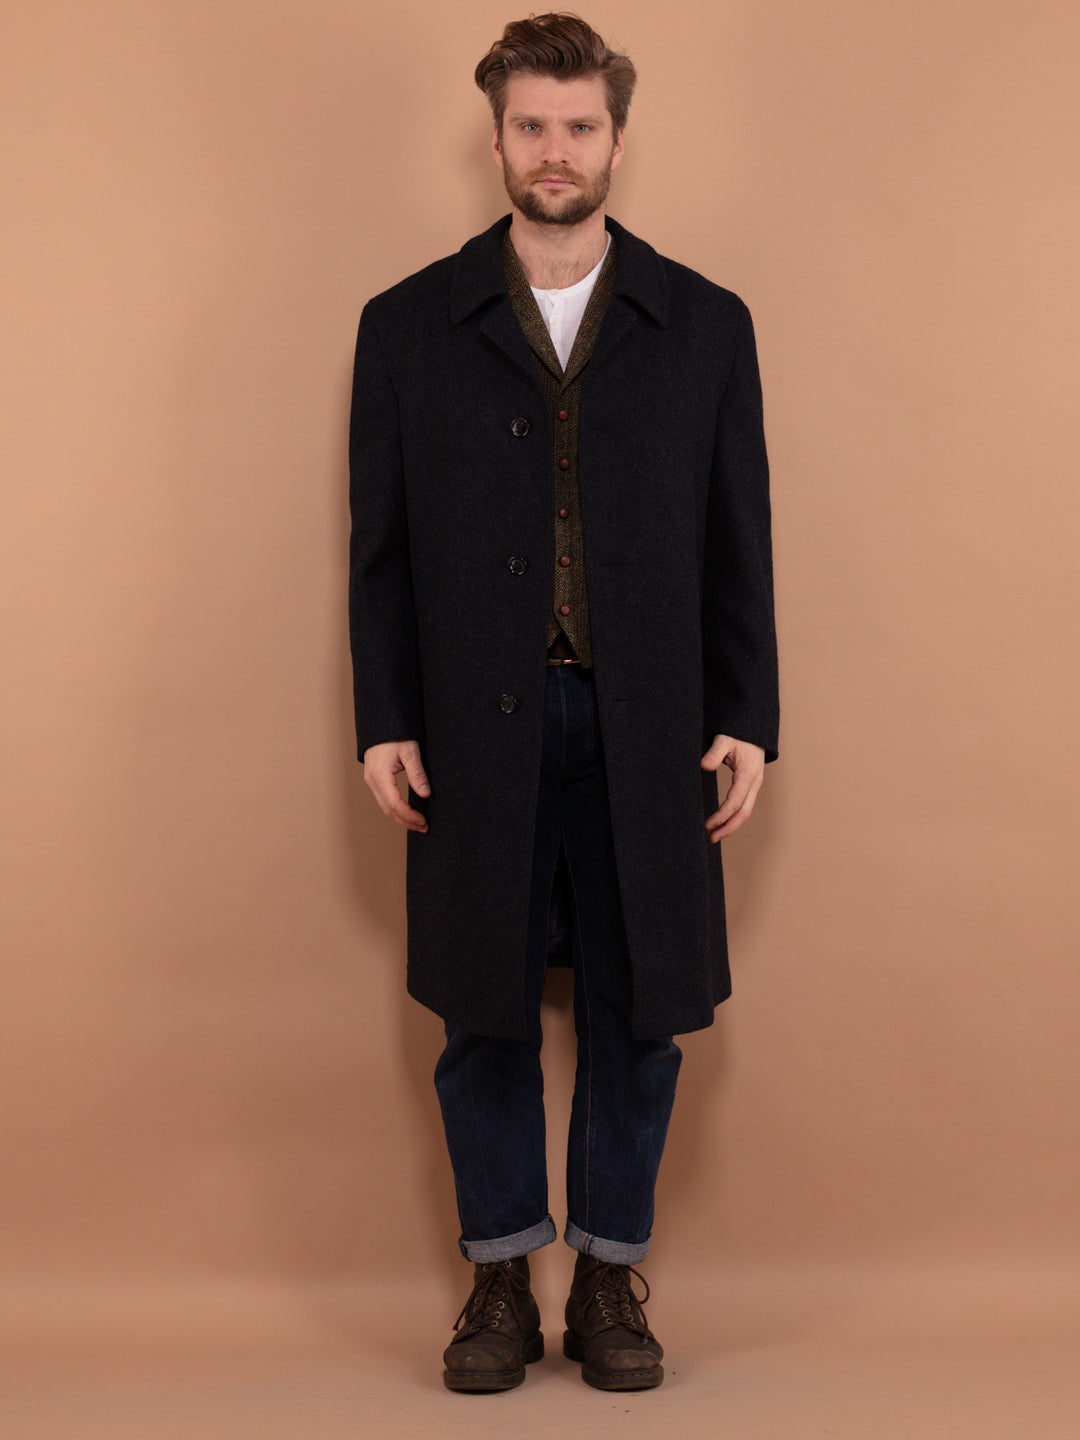 70s Men's Wool Coat, Size Large, Blue Wool Overcoat, Retro Wool Coat, Vintage Men Clothing, Classic Long Coat, Made in Scotland